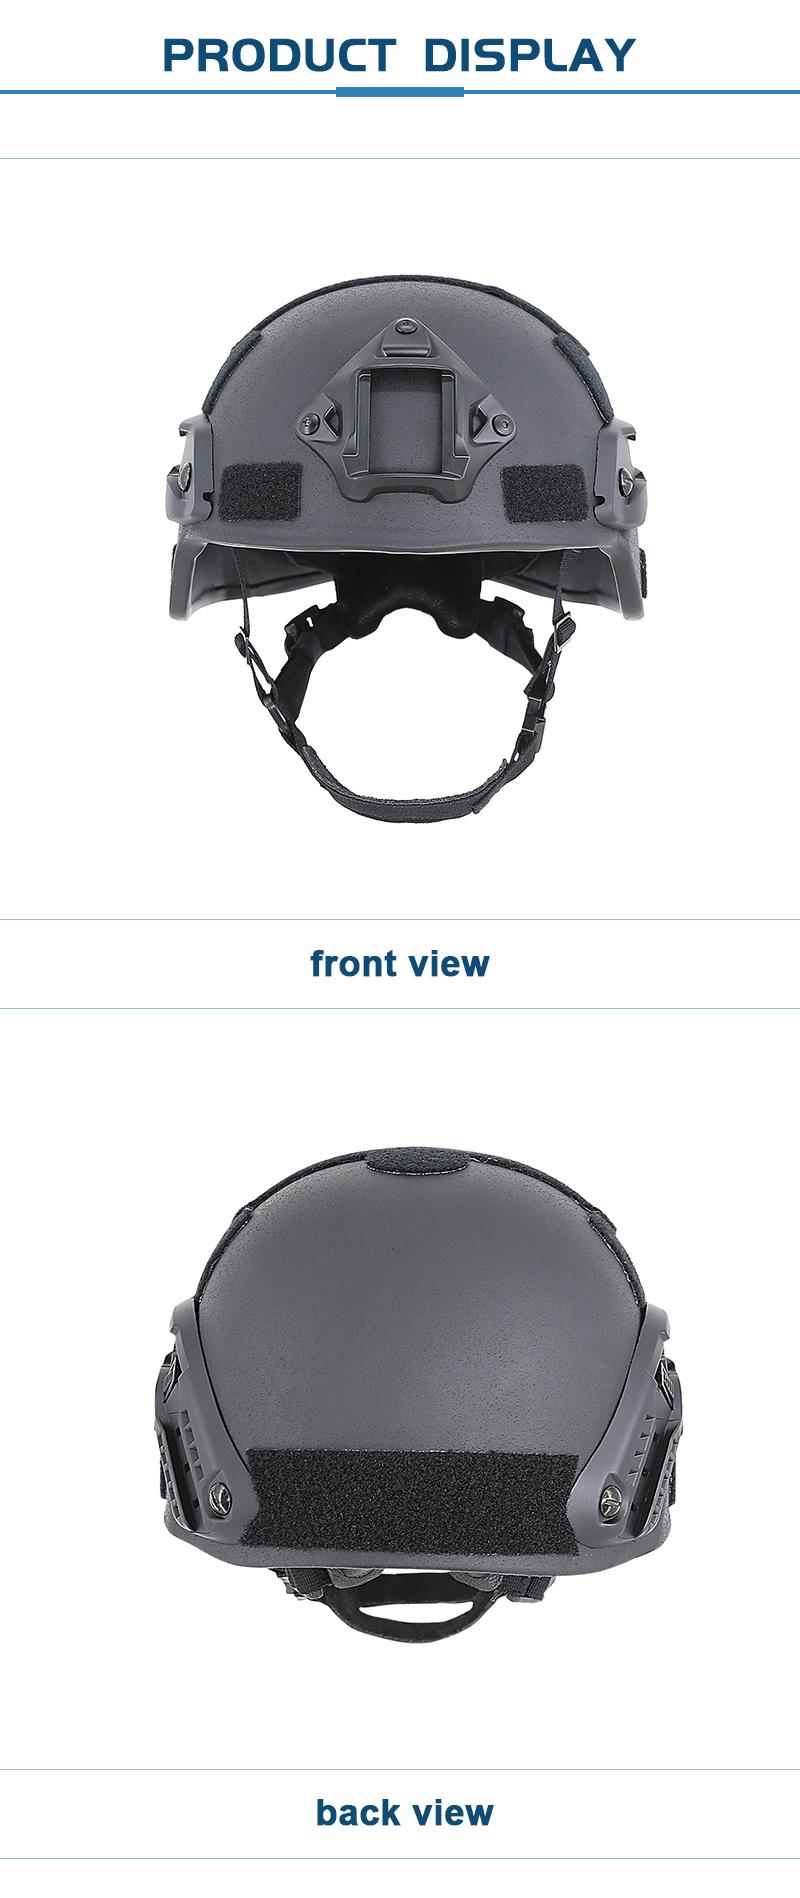 Double Safe Military Ballistic Level 3 Army Bulletproof Helmet